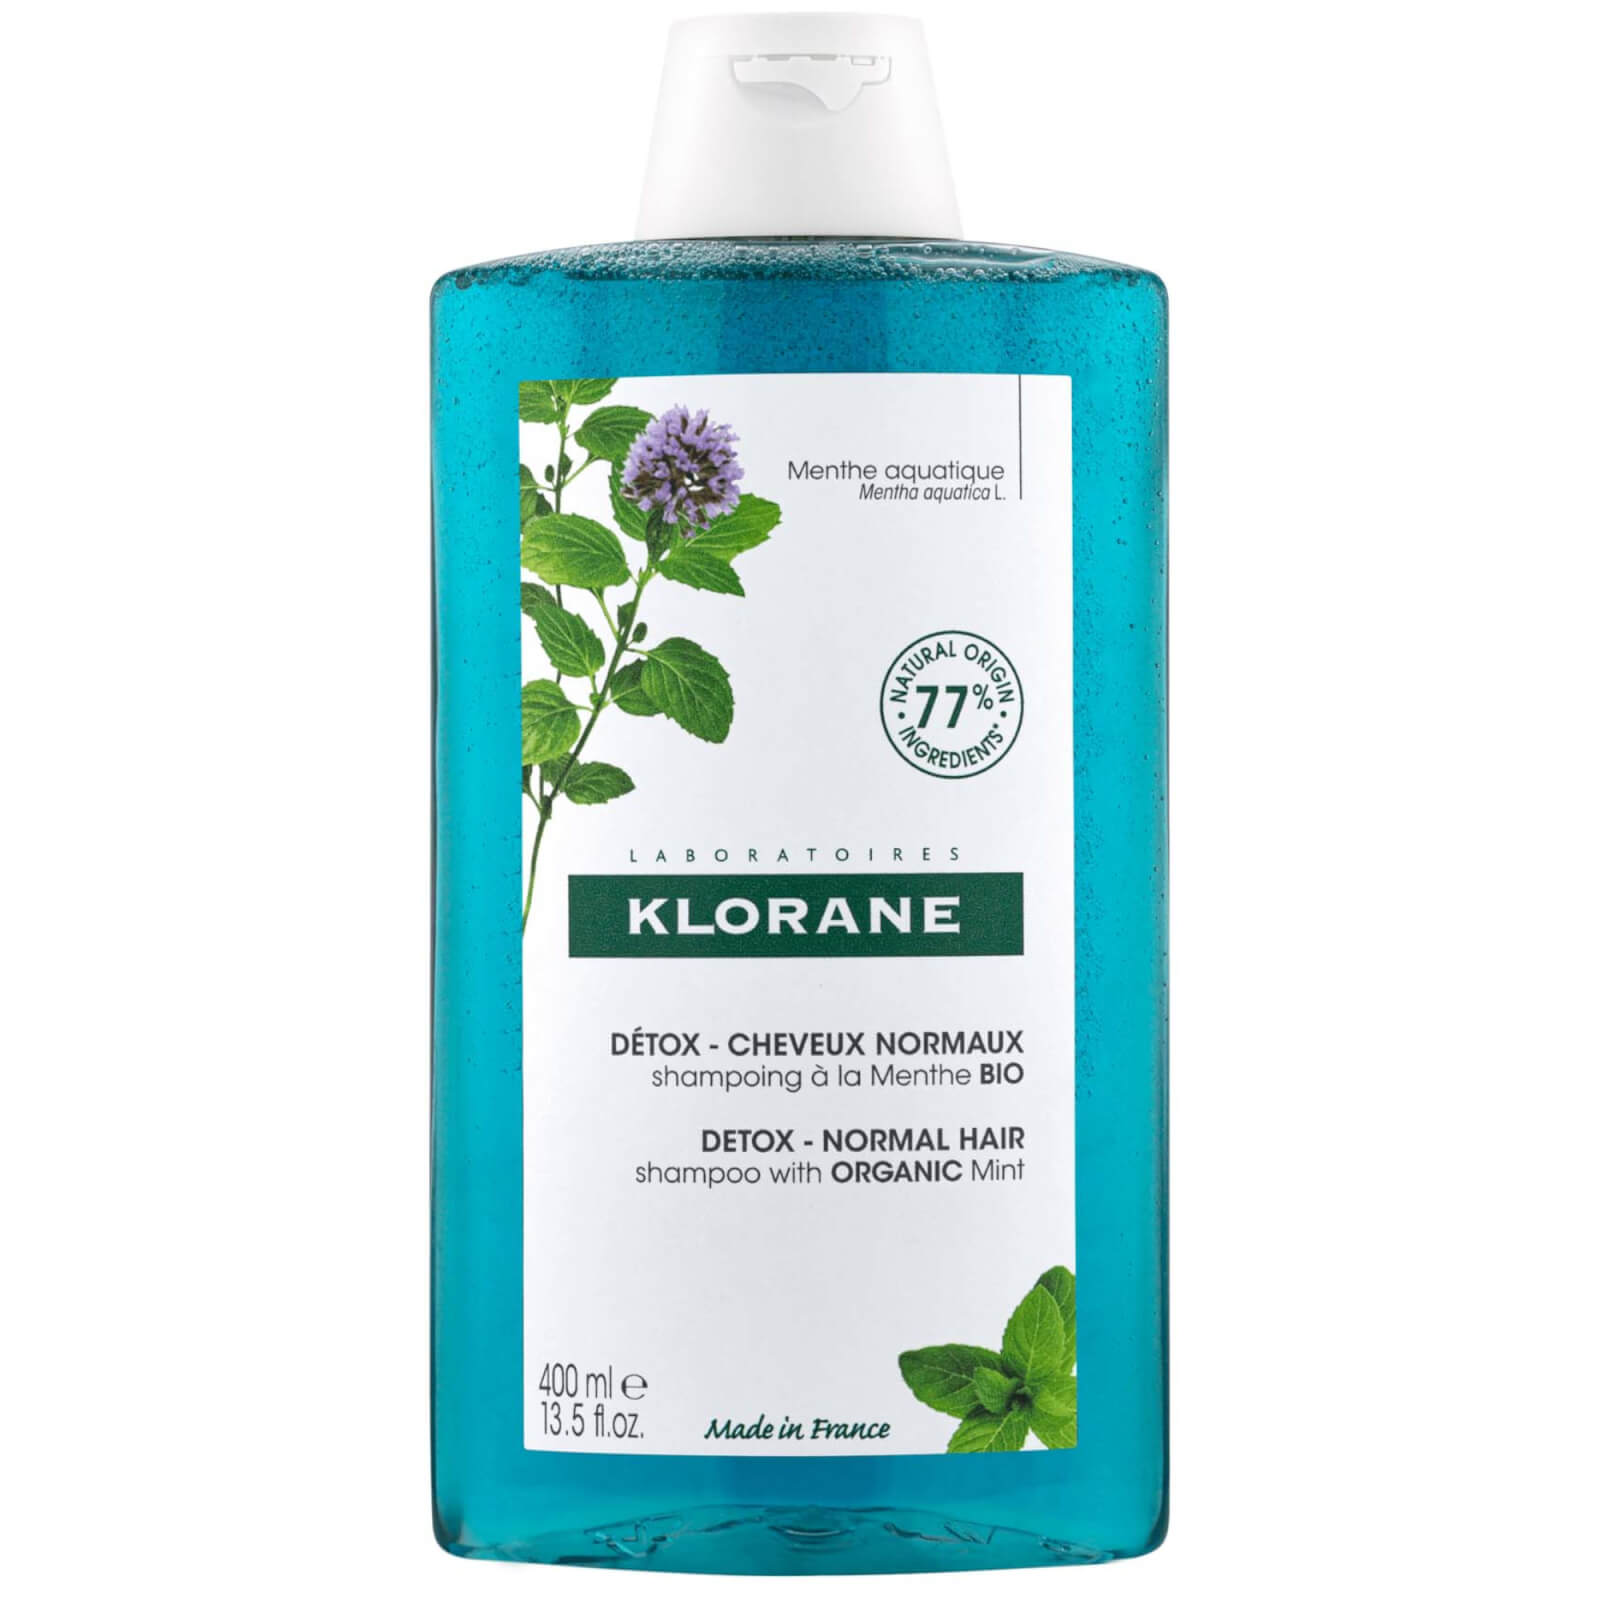 Photos - Hair Product Klorane Detox Shampoo with Aquatic Mint 400ml P0006939 